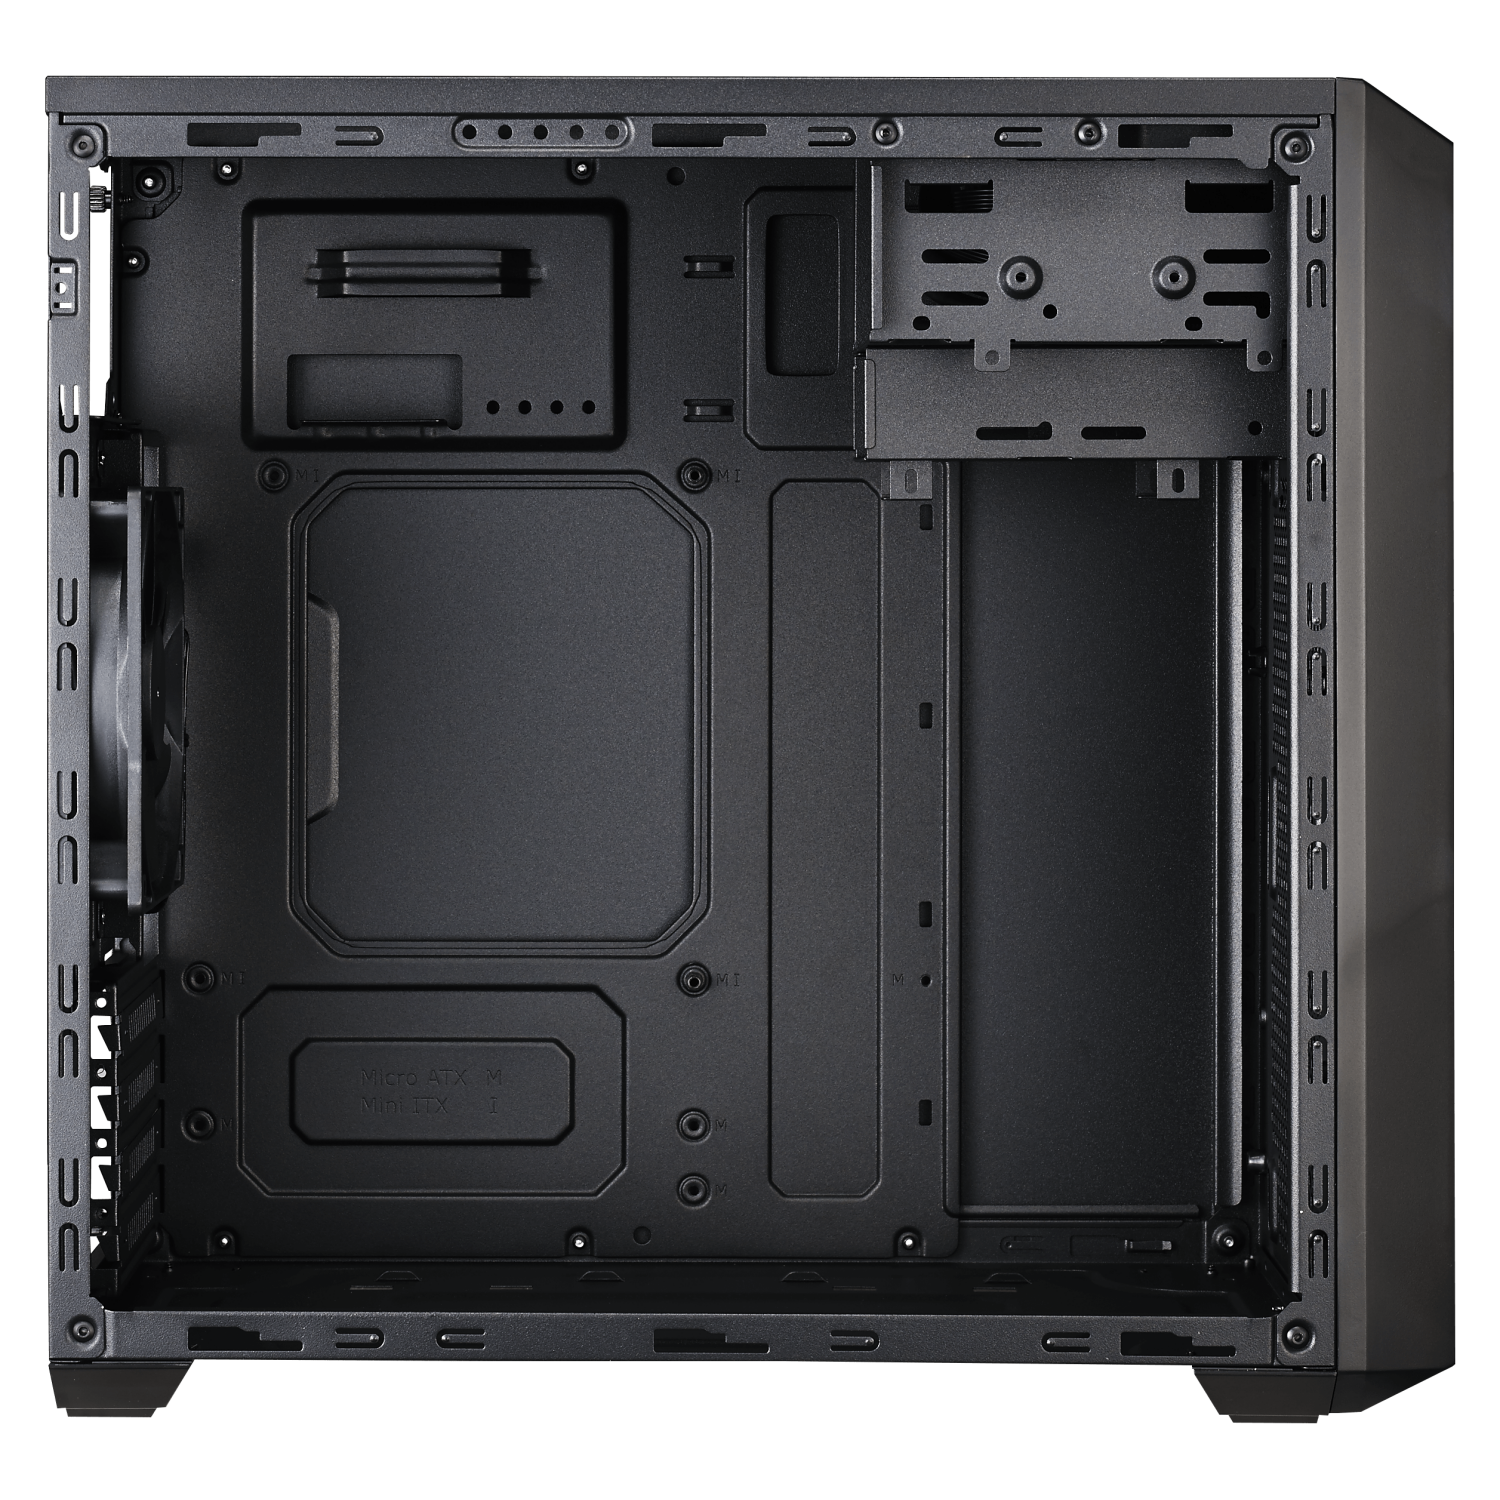 CM Case Masterbox Lite 3 SI Micro ATX; 1 x DVD Bay; Black. 